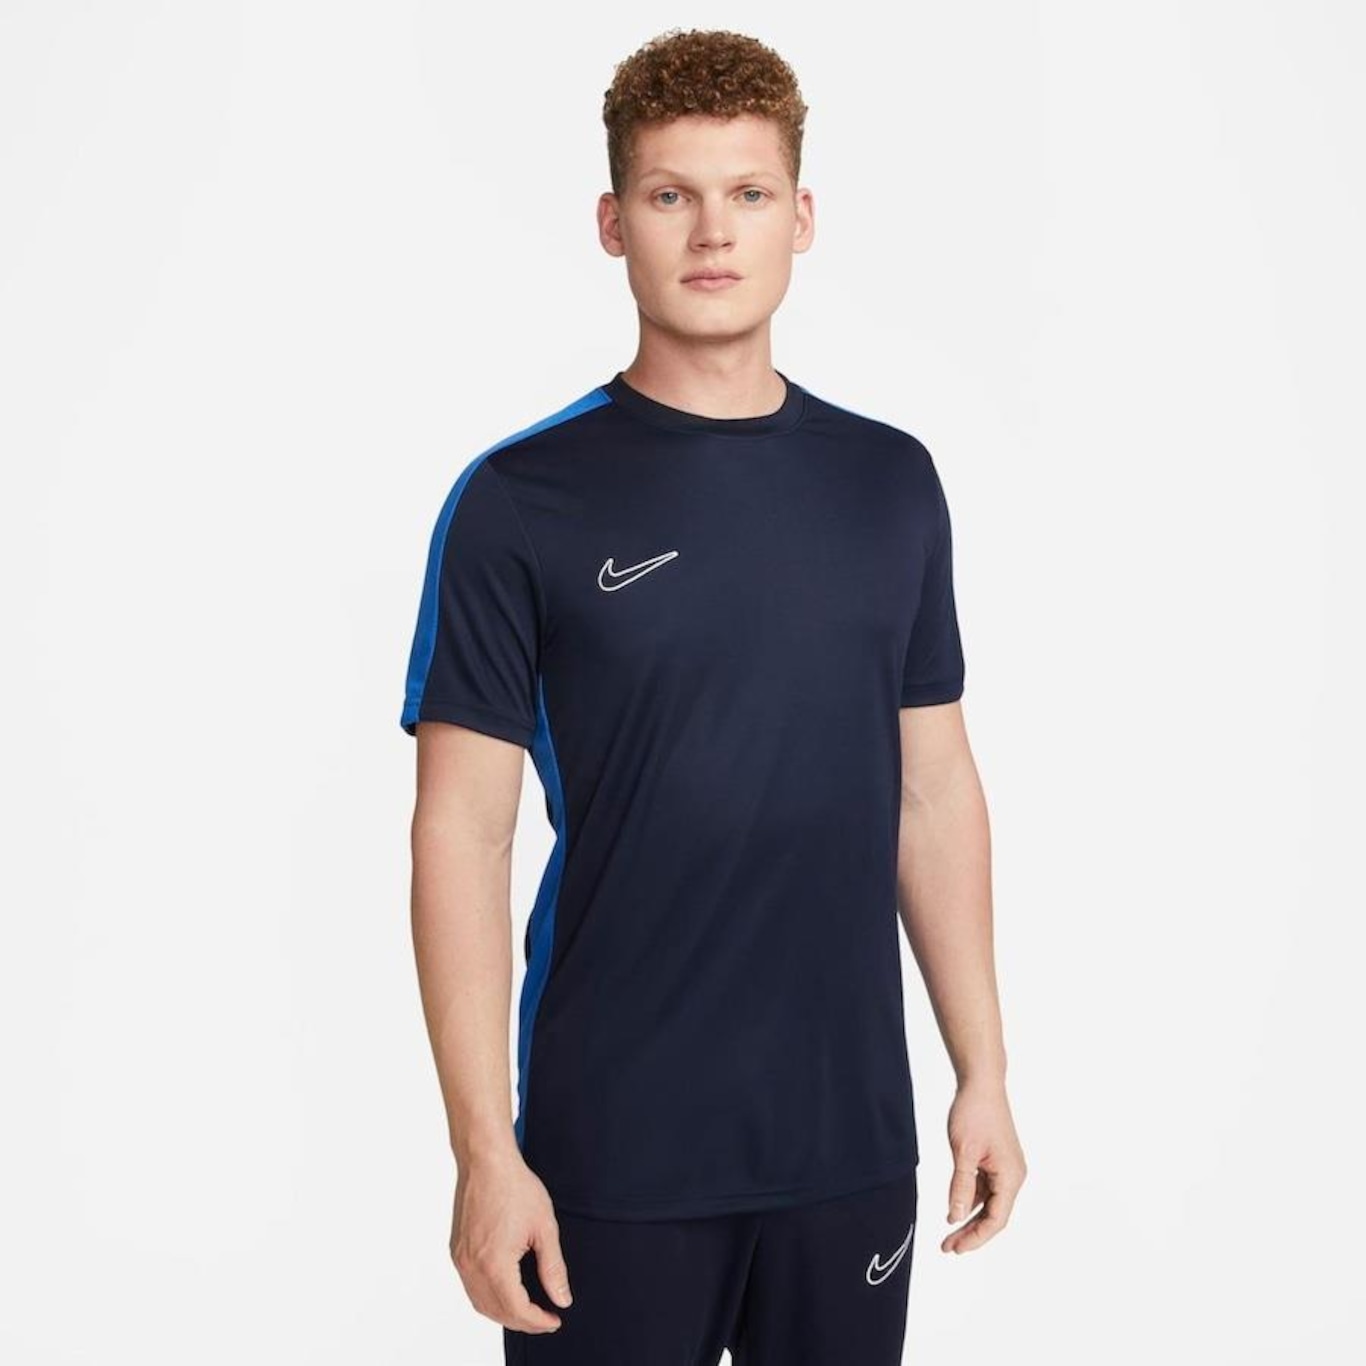 Camiseta Nike Pro Dri-Fit - Masculina em Promoção